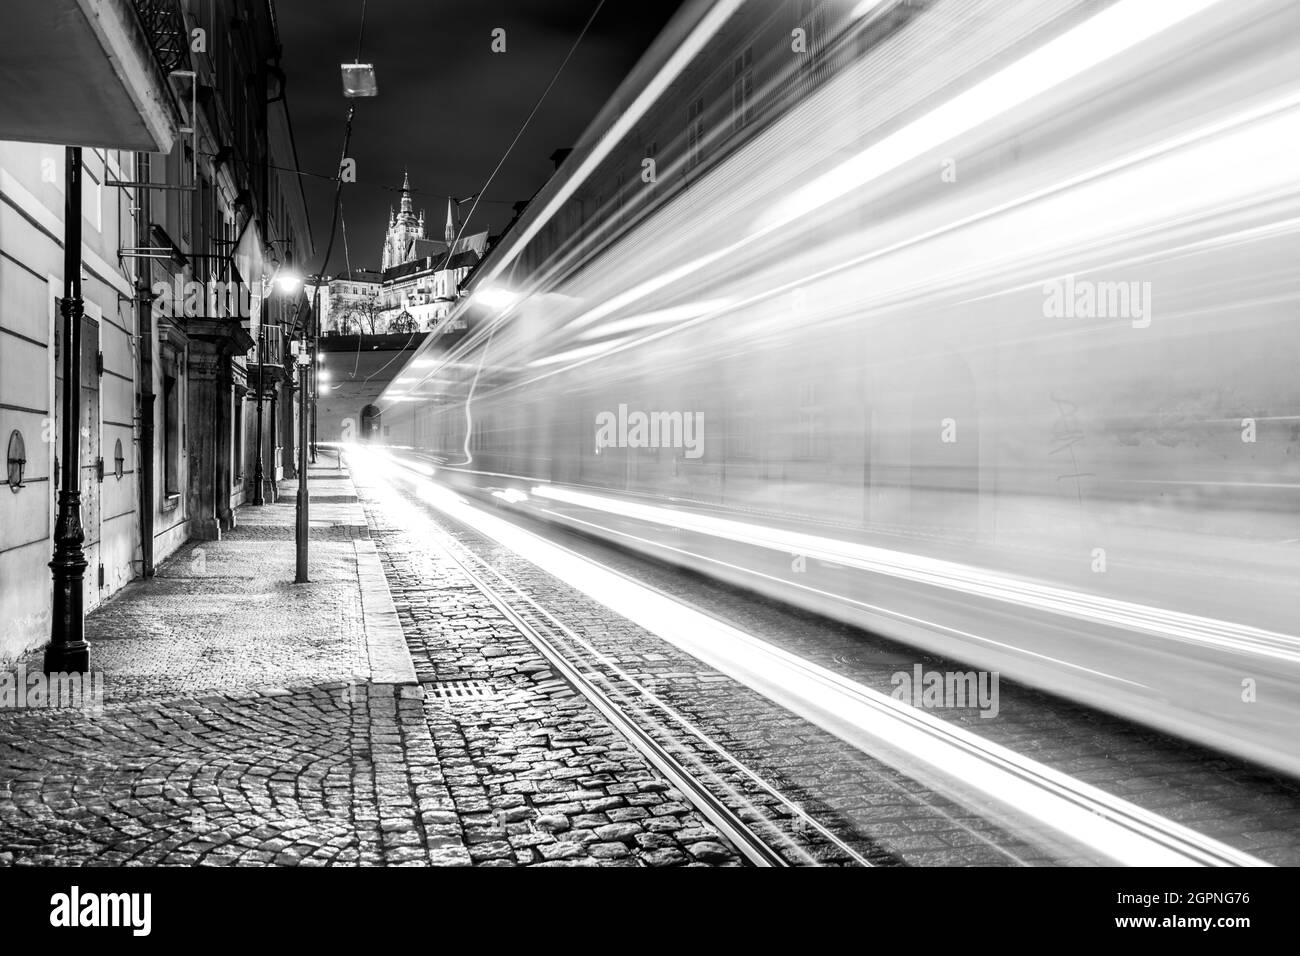 Night tram in Prague. Motion blurred tram in Letenska Street, Lesser Town of Prague, Czech Republic. Black and white image. Stock Photo